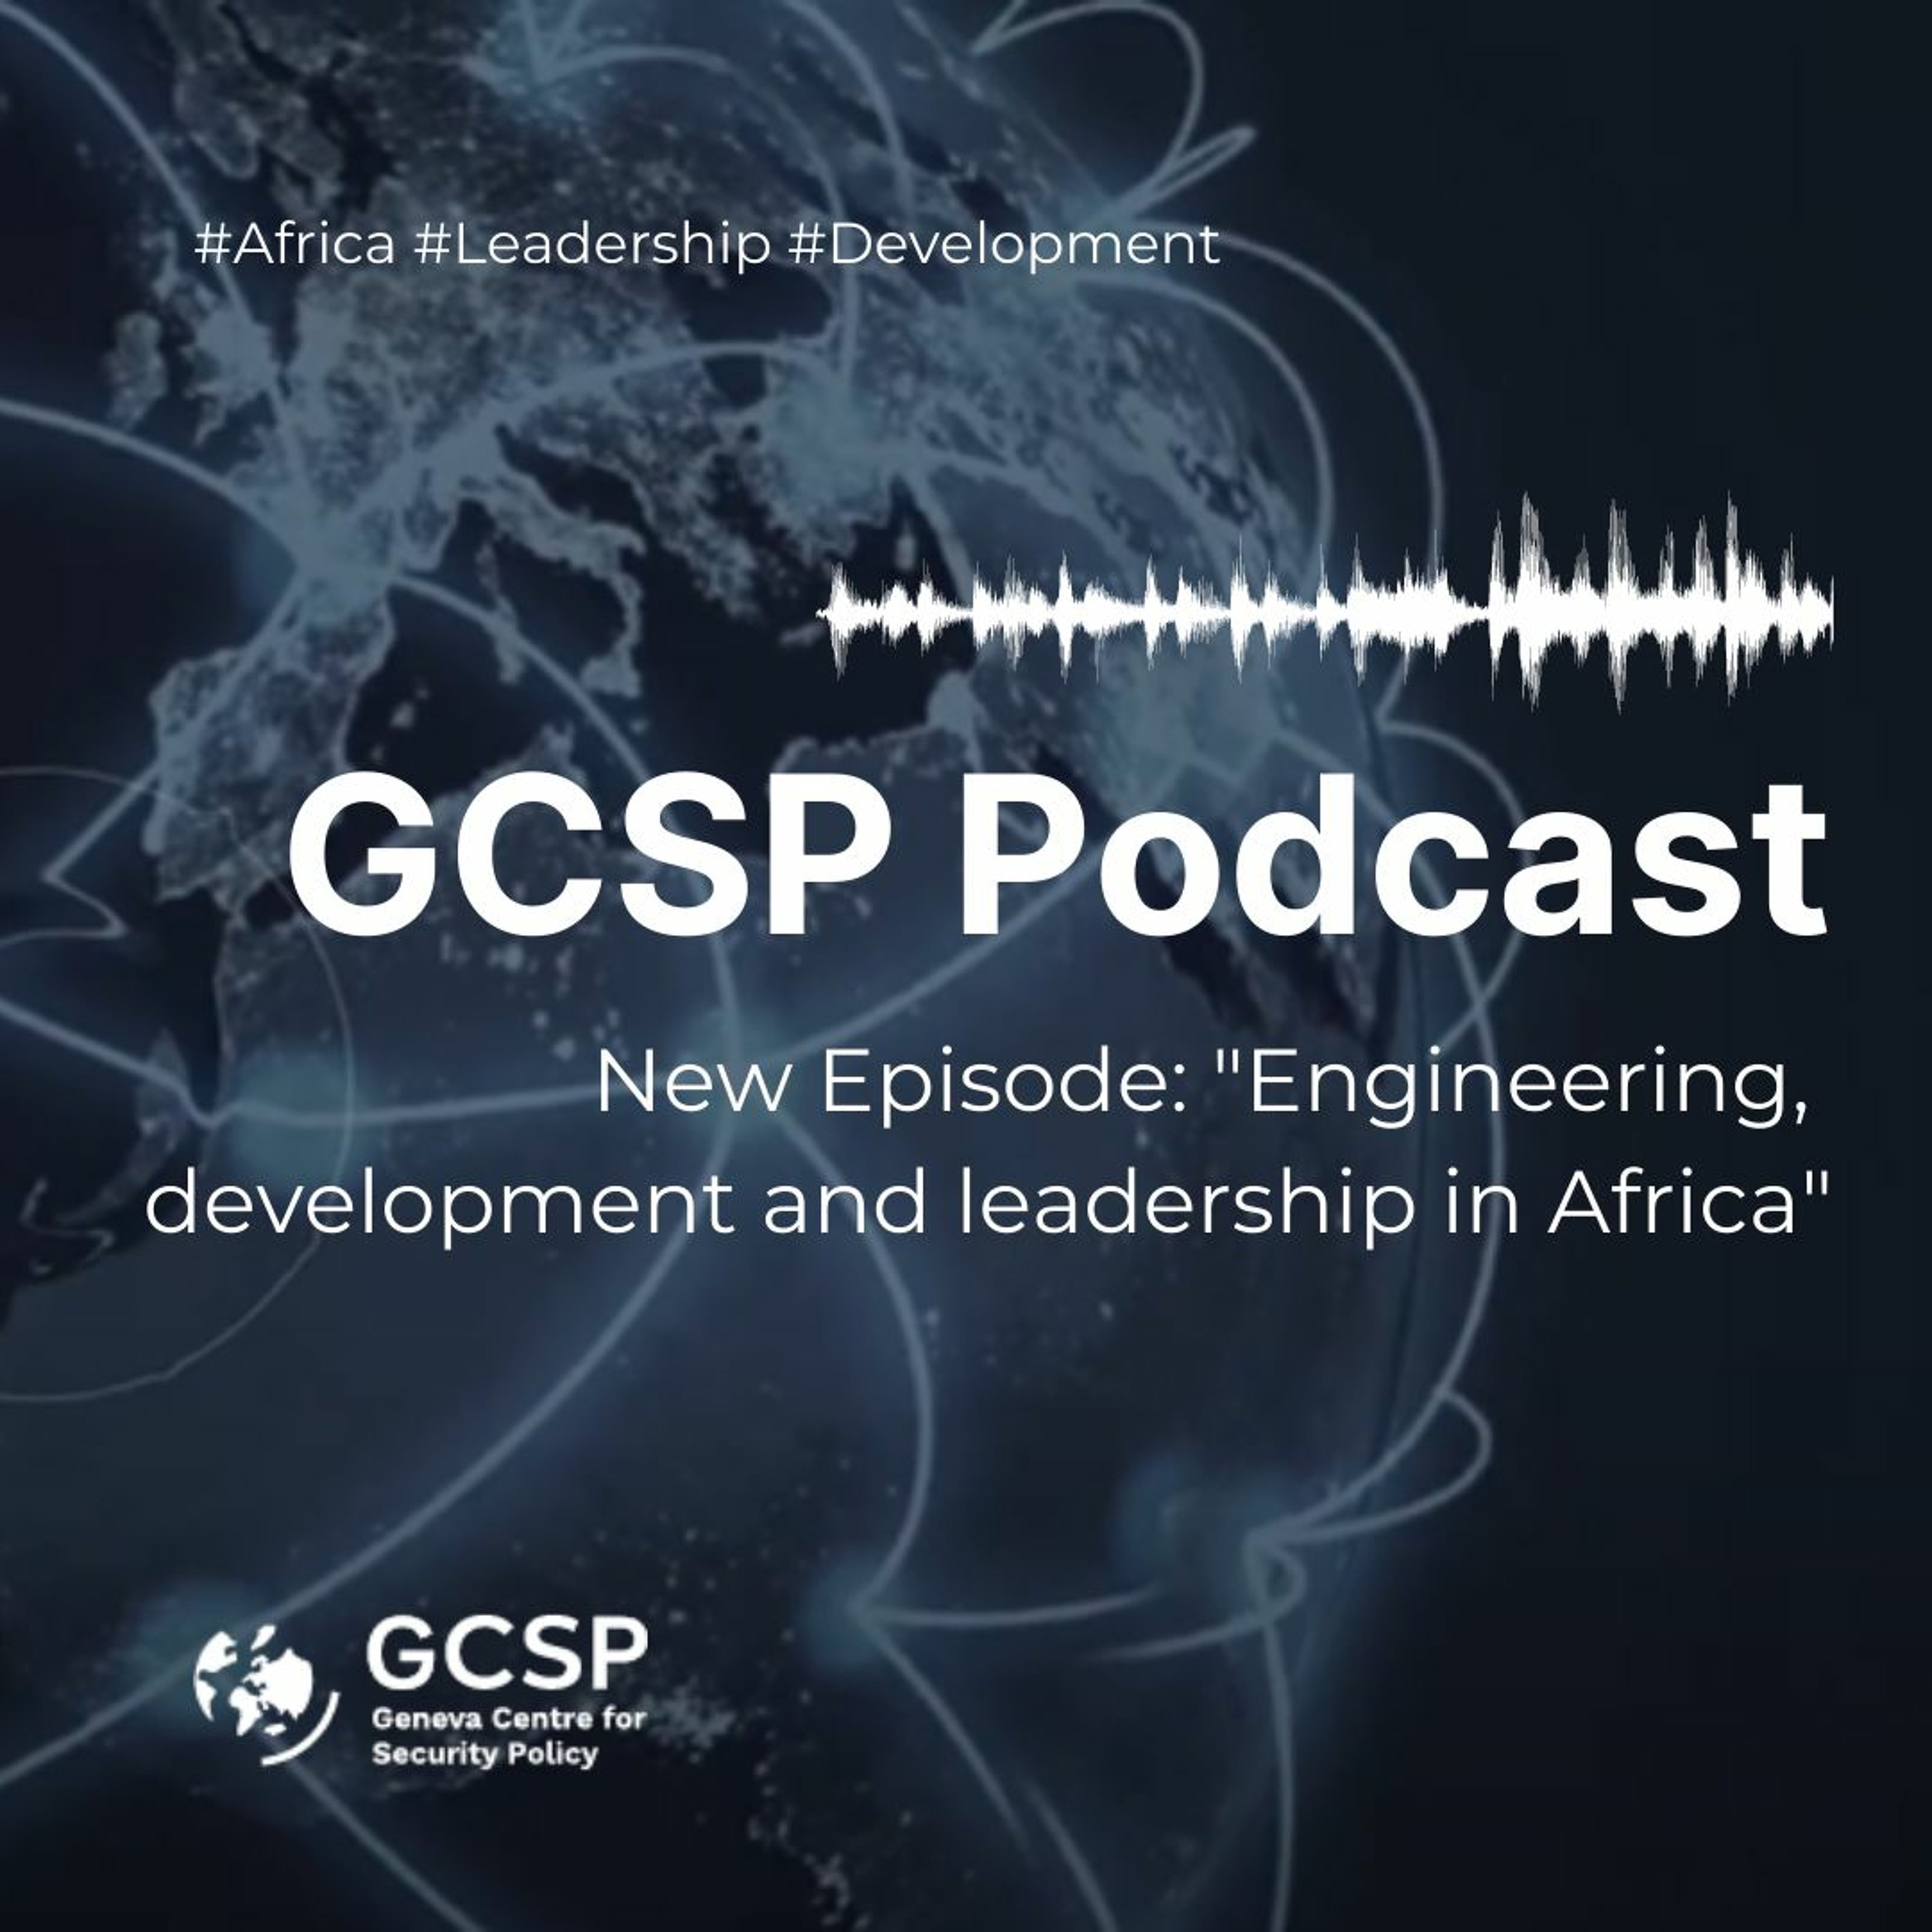 Engineering, development and leadership in Africa